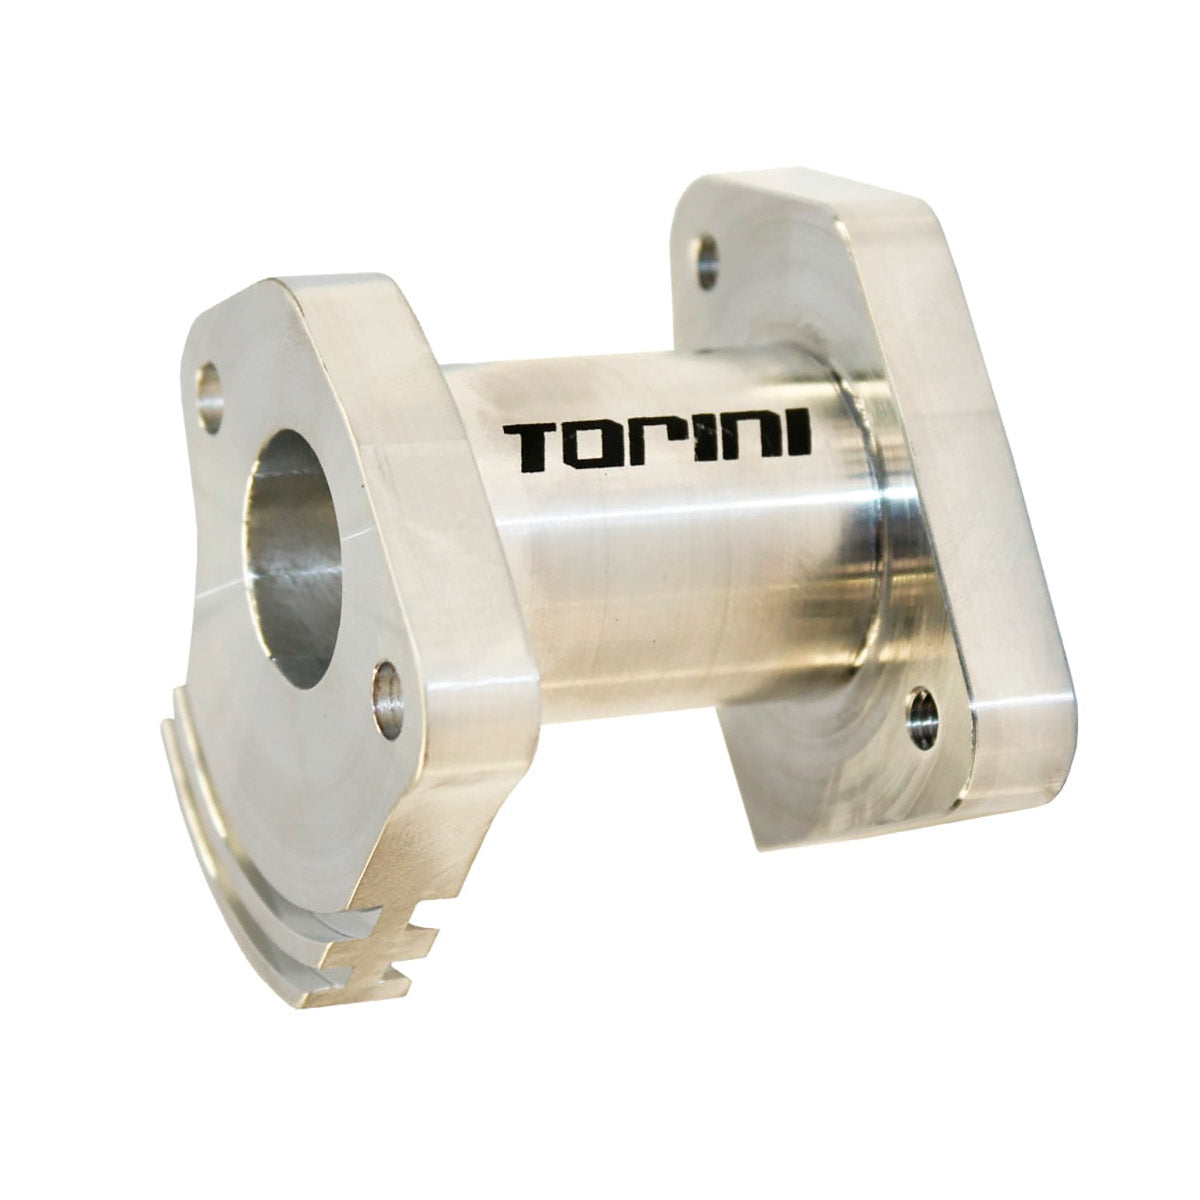 Torini 4S Billet Manifold to suit 19mm Venturi Butterfly Carburettor